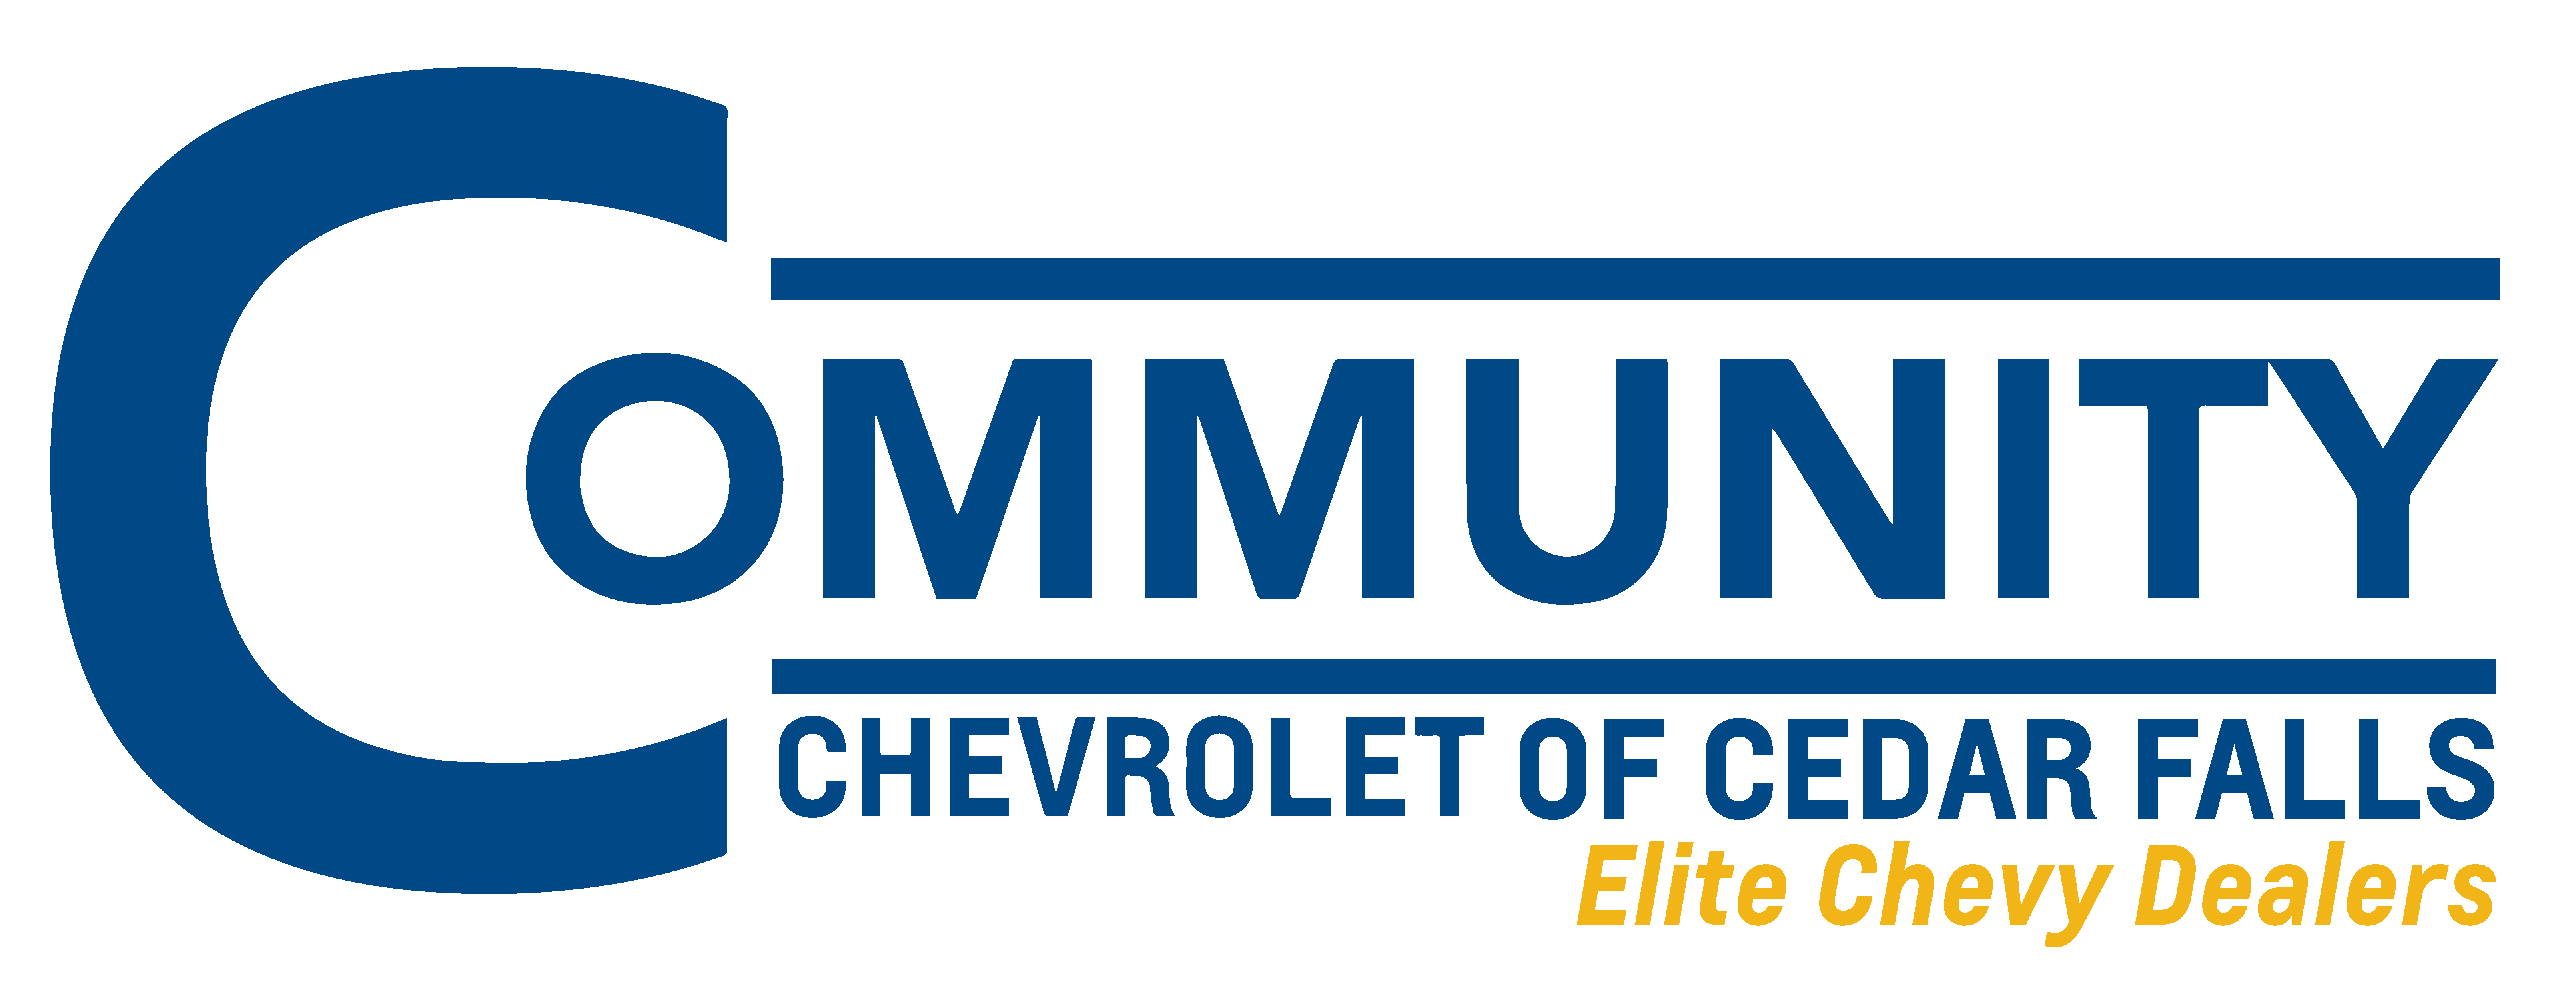 Community Motors Logo